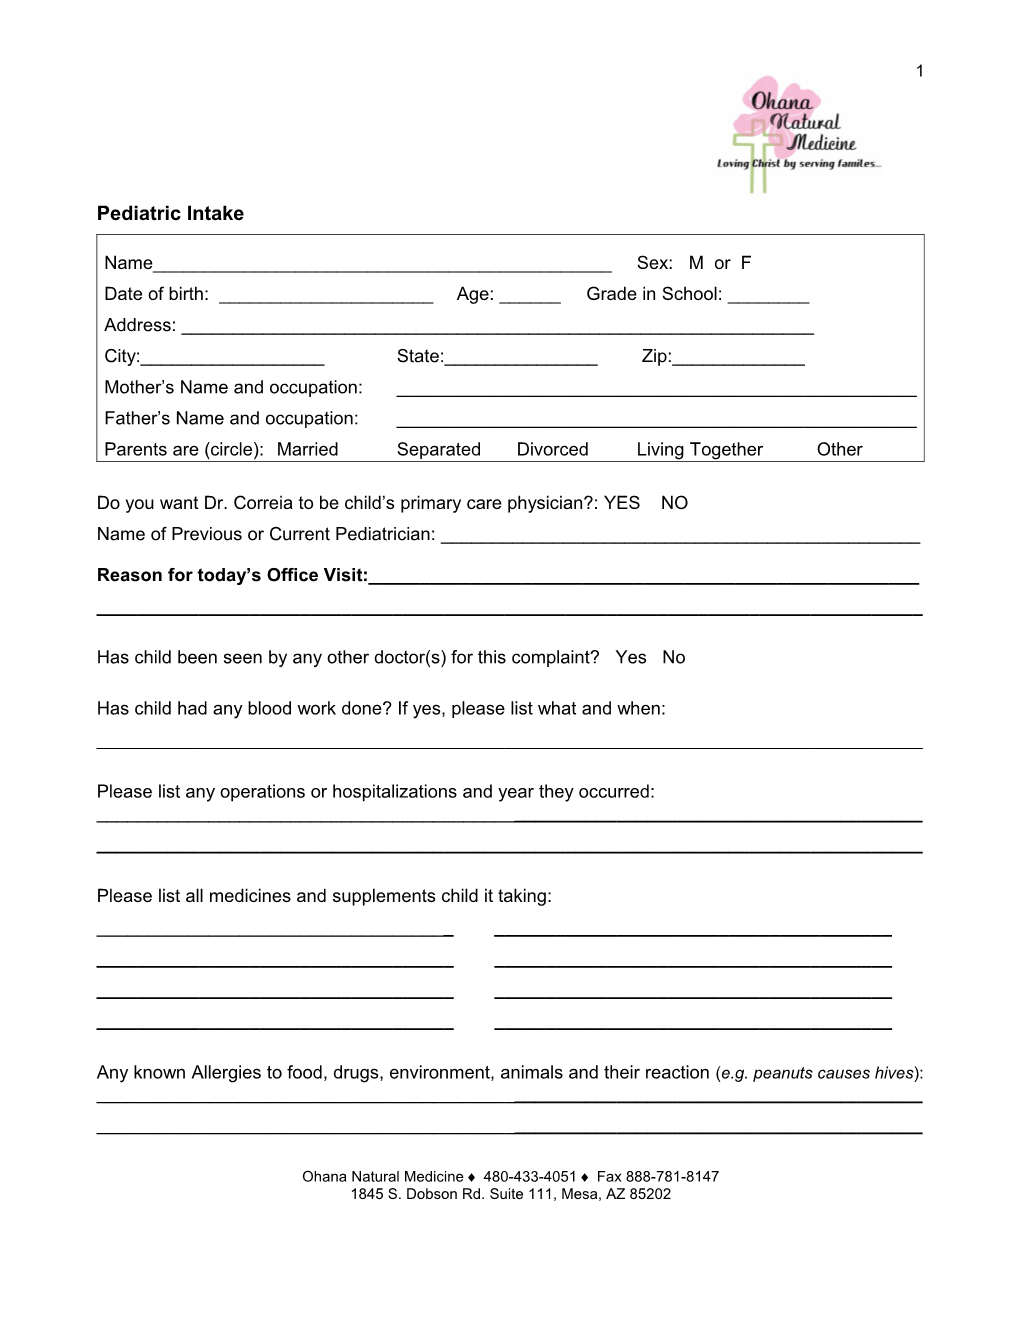 Pediatric Intake Form